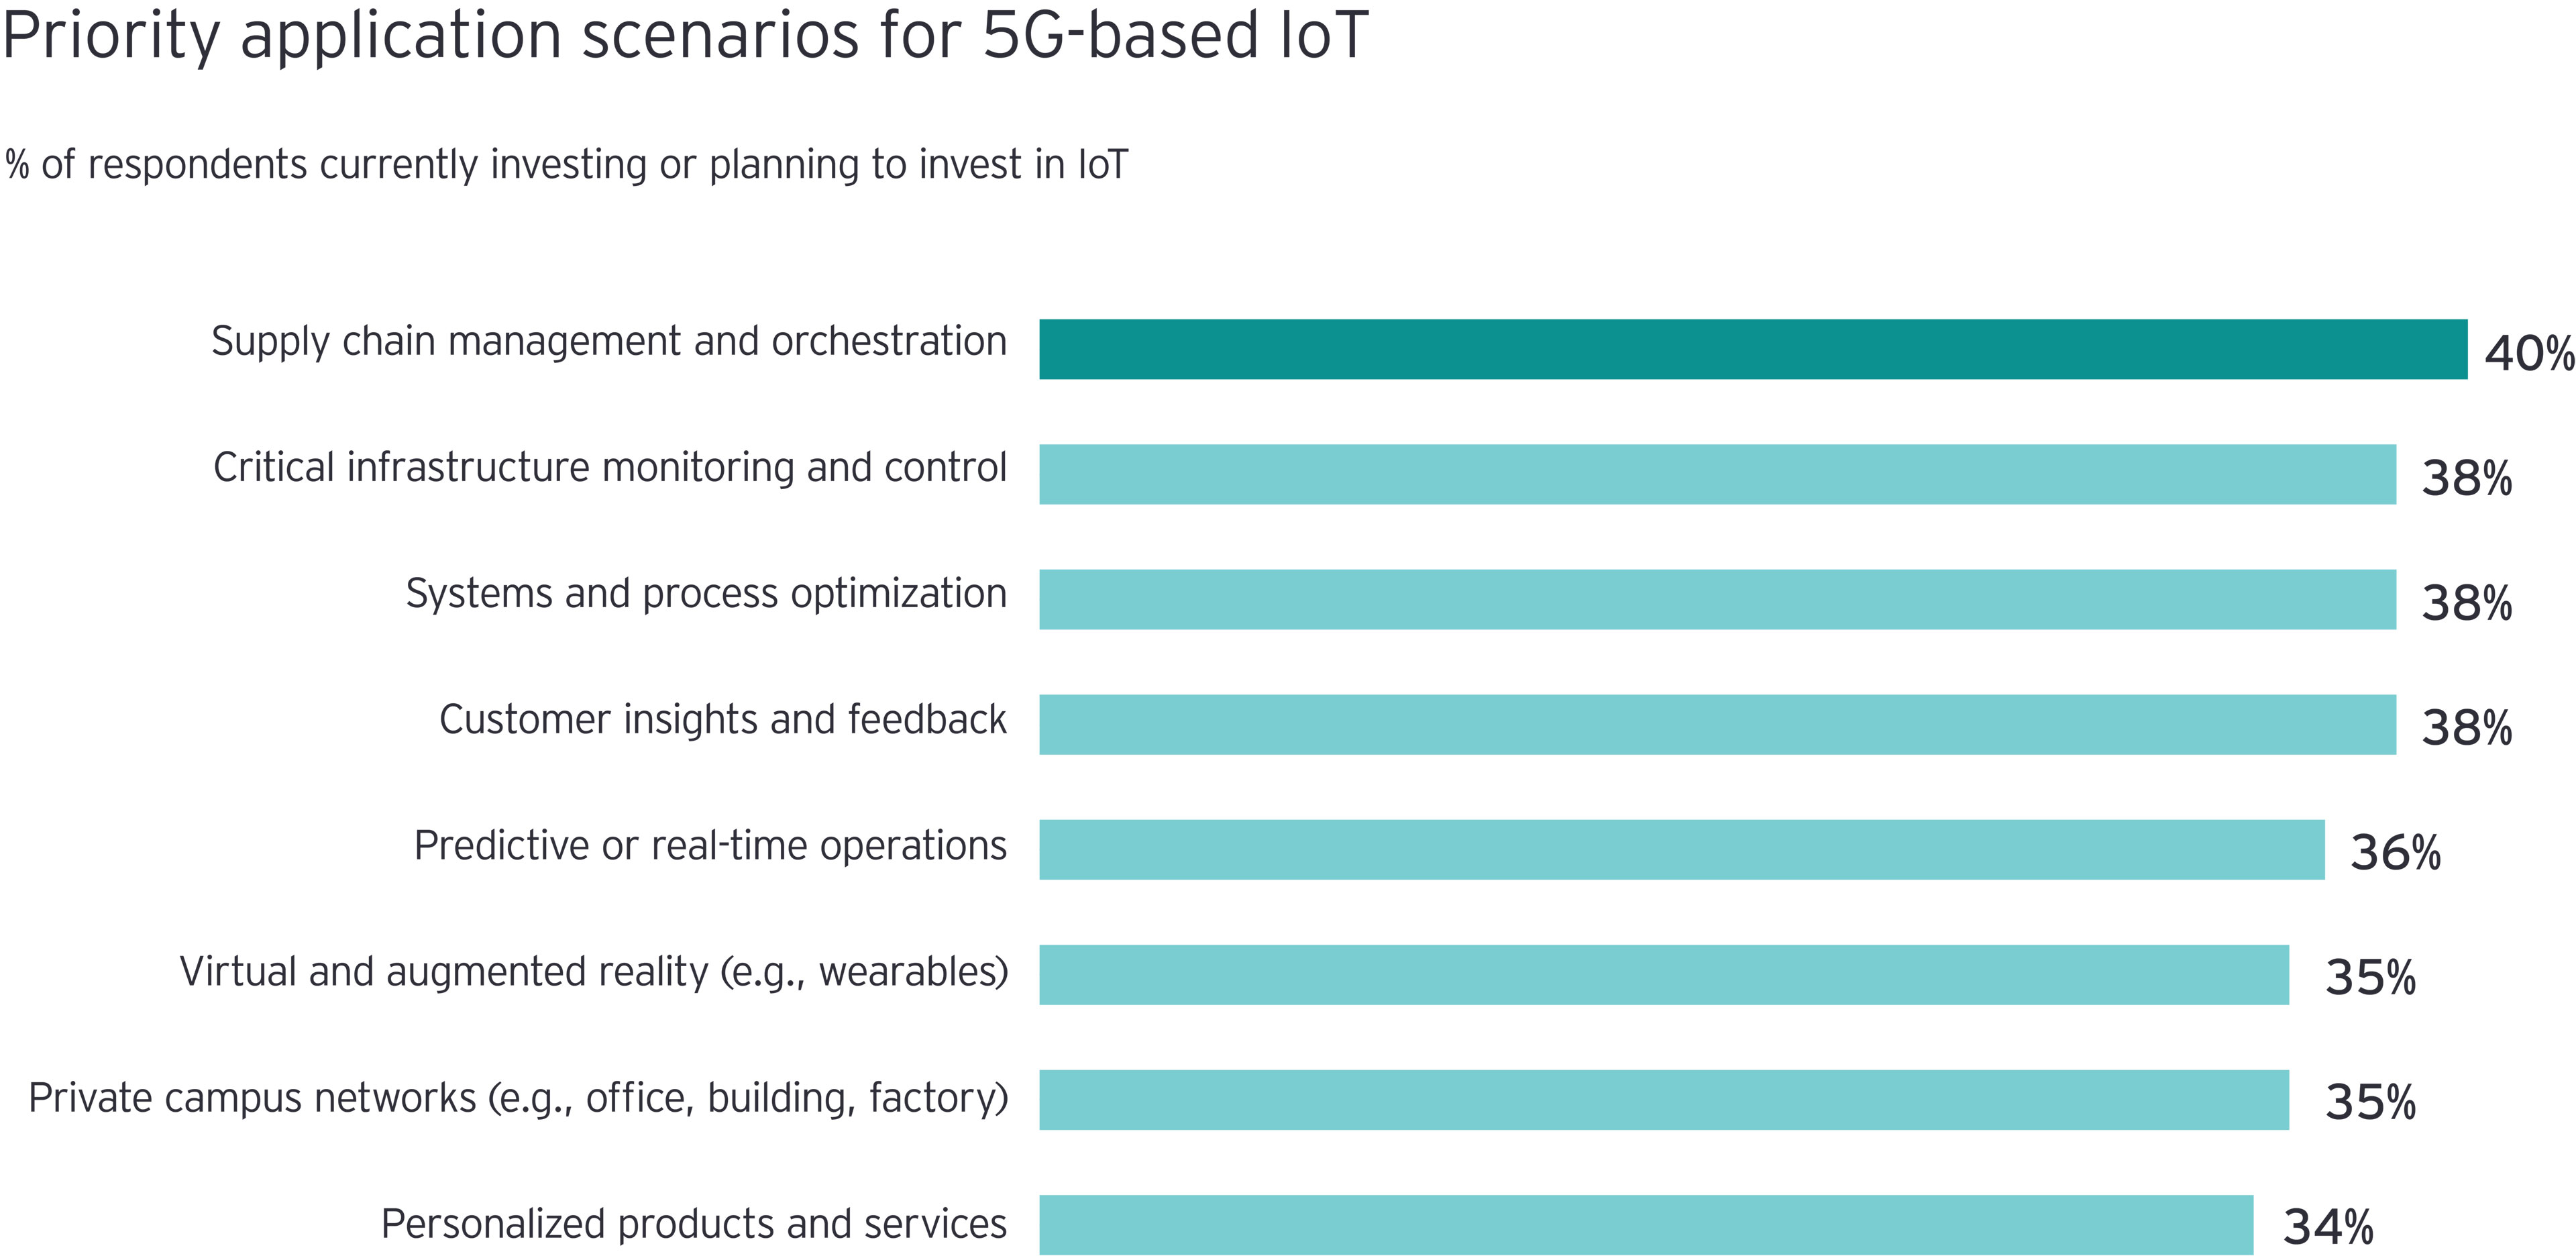 Priority application scenarios for 5G-based IoT